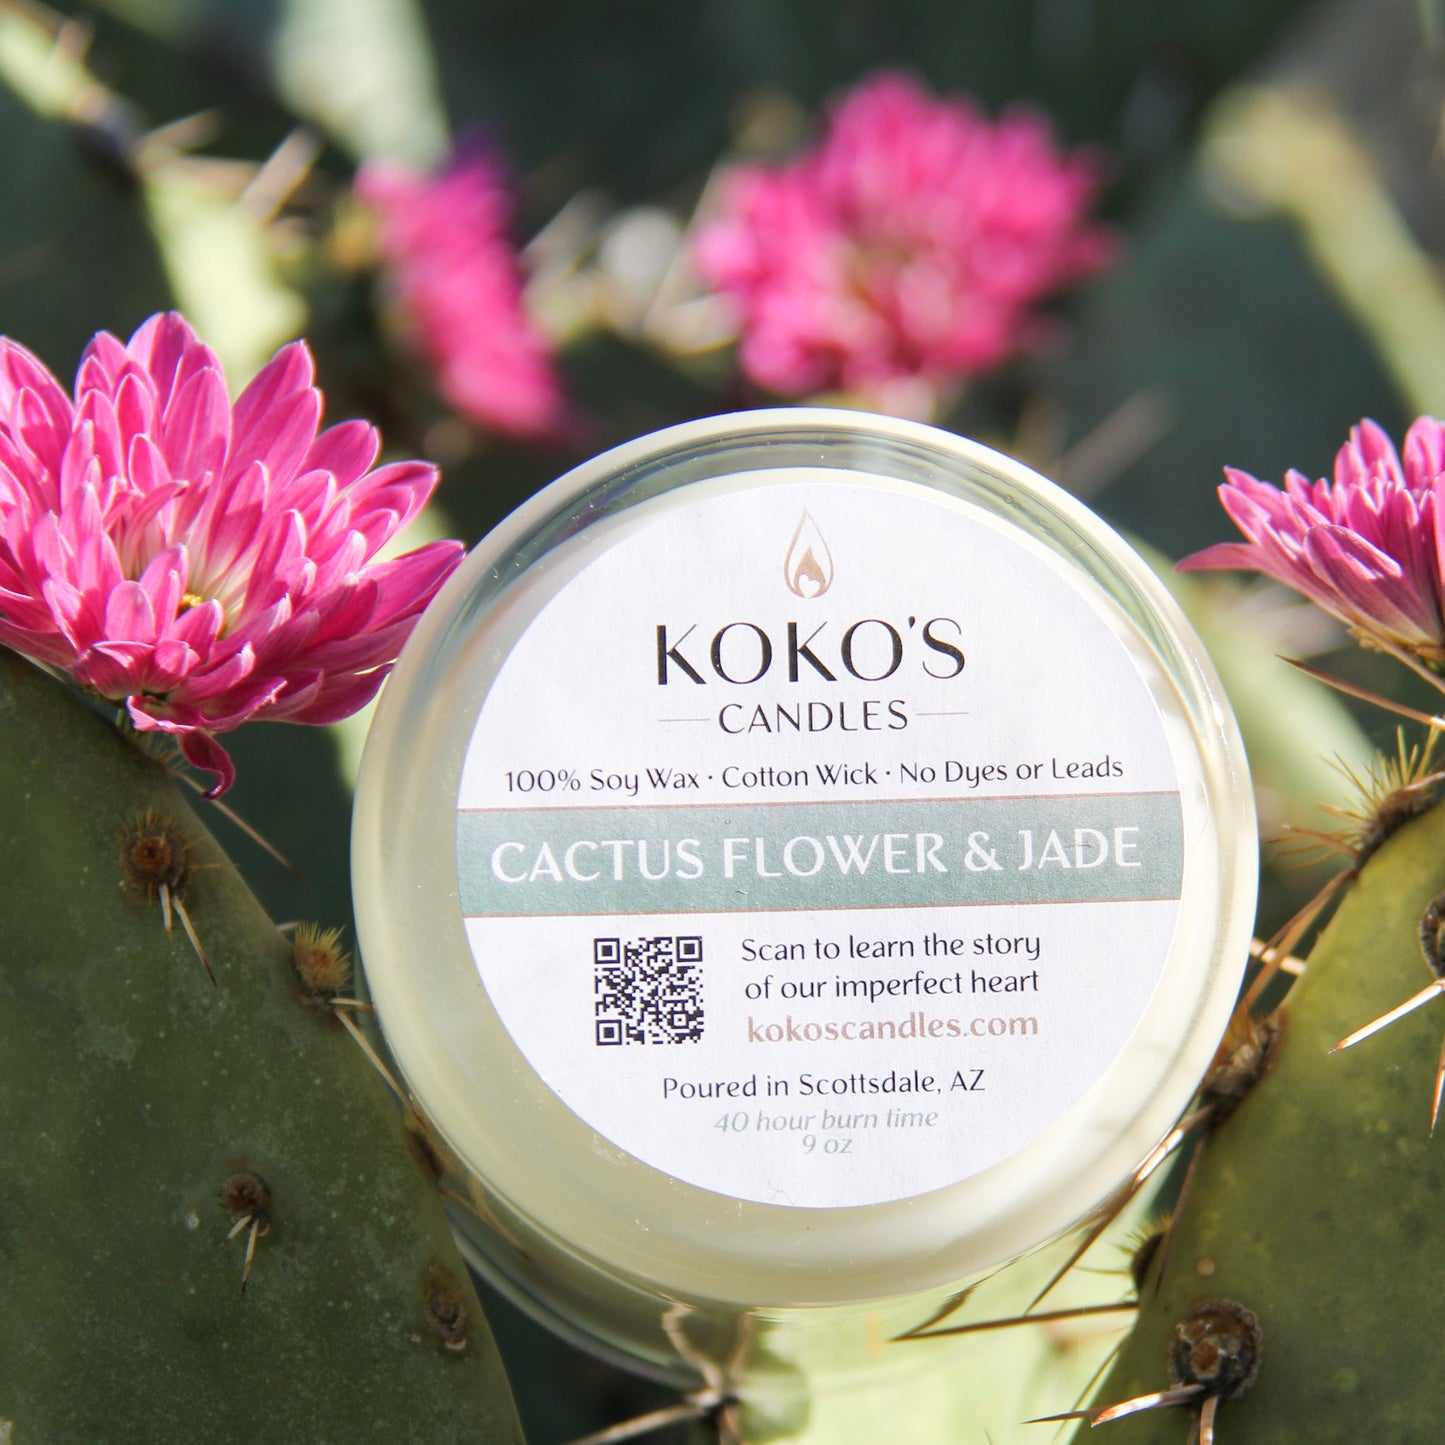 Cactus Flower & Jade - Koko's Candles